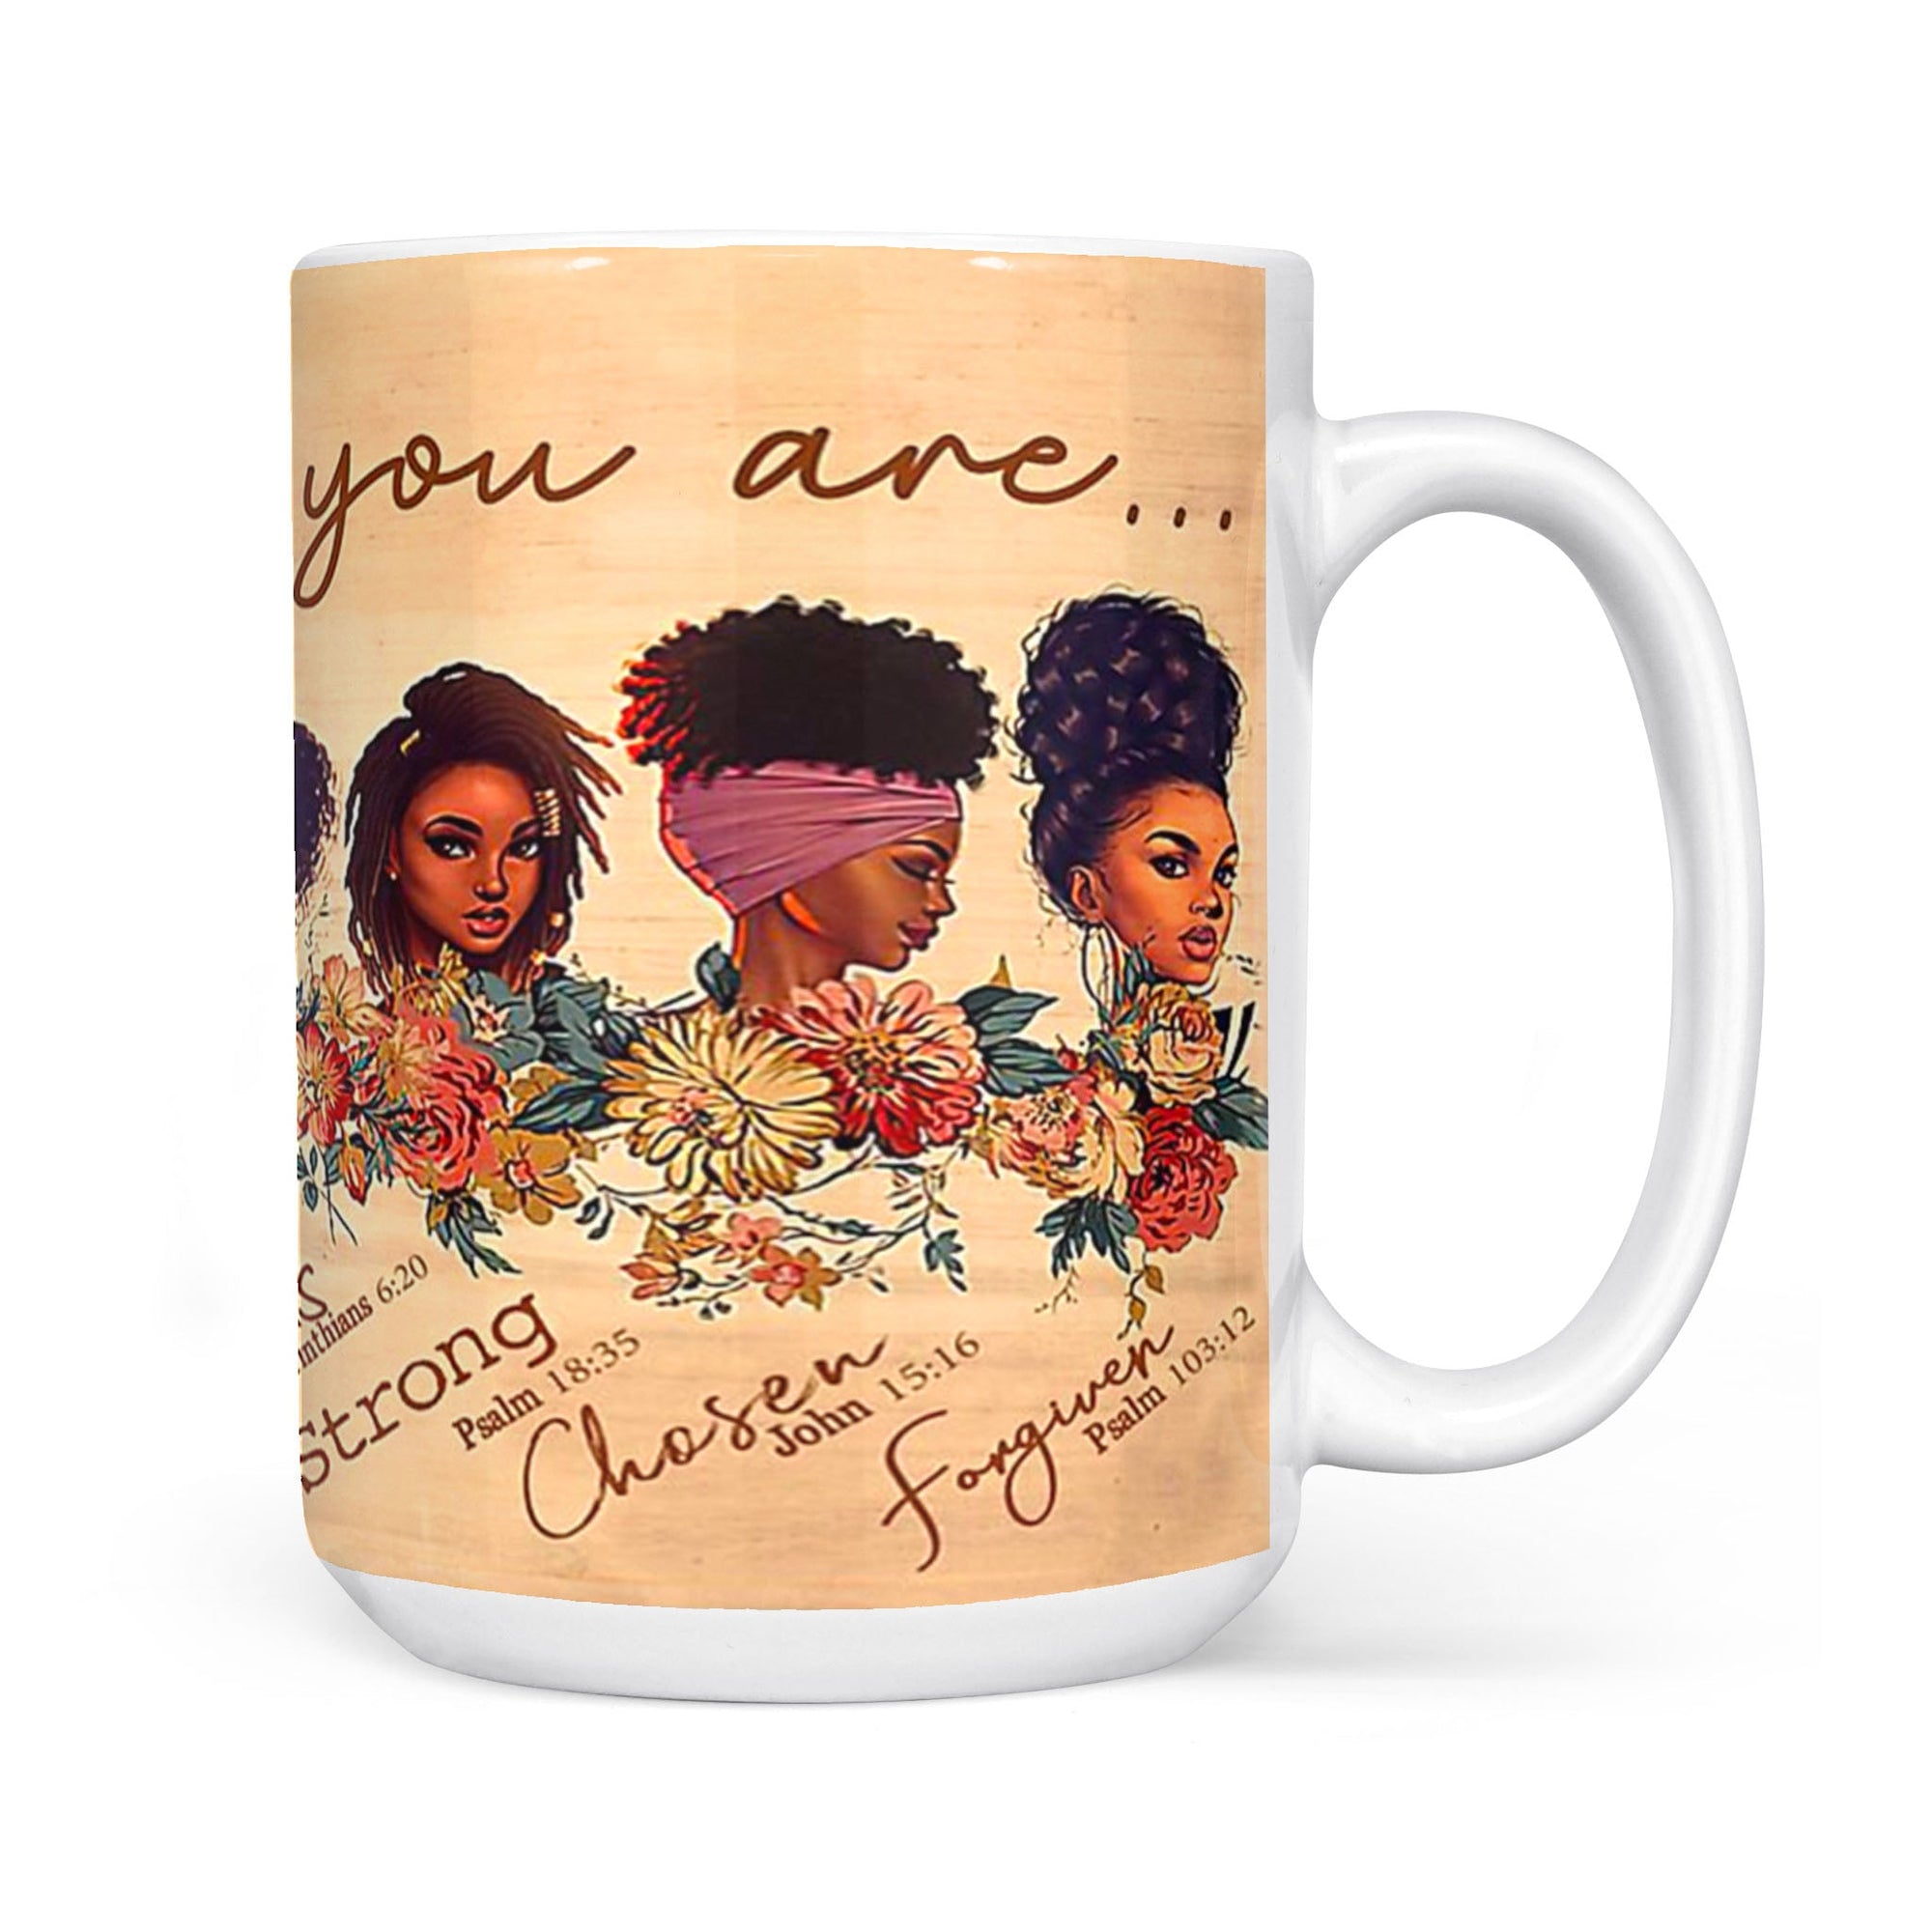 Black Girls God says you are unique special lovely precious strong chosen forgiven White Edge-to-Edge Mug